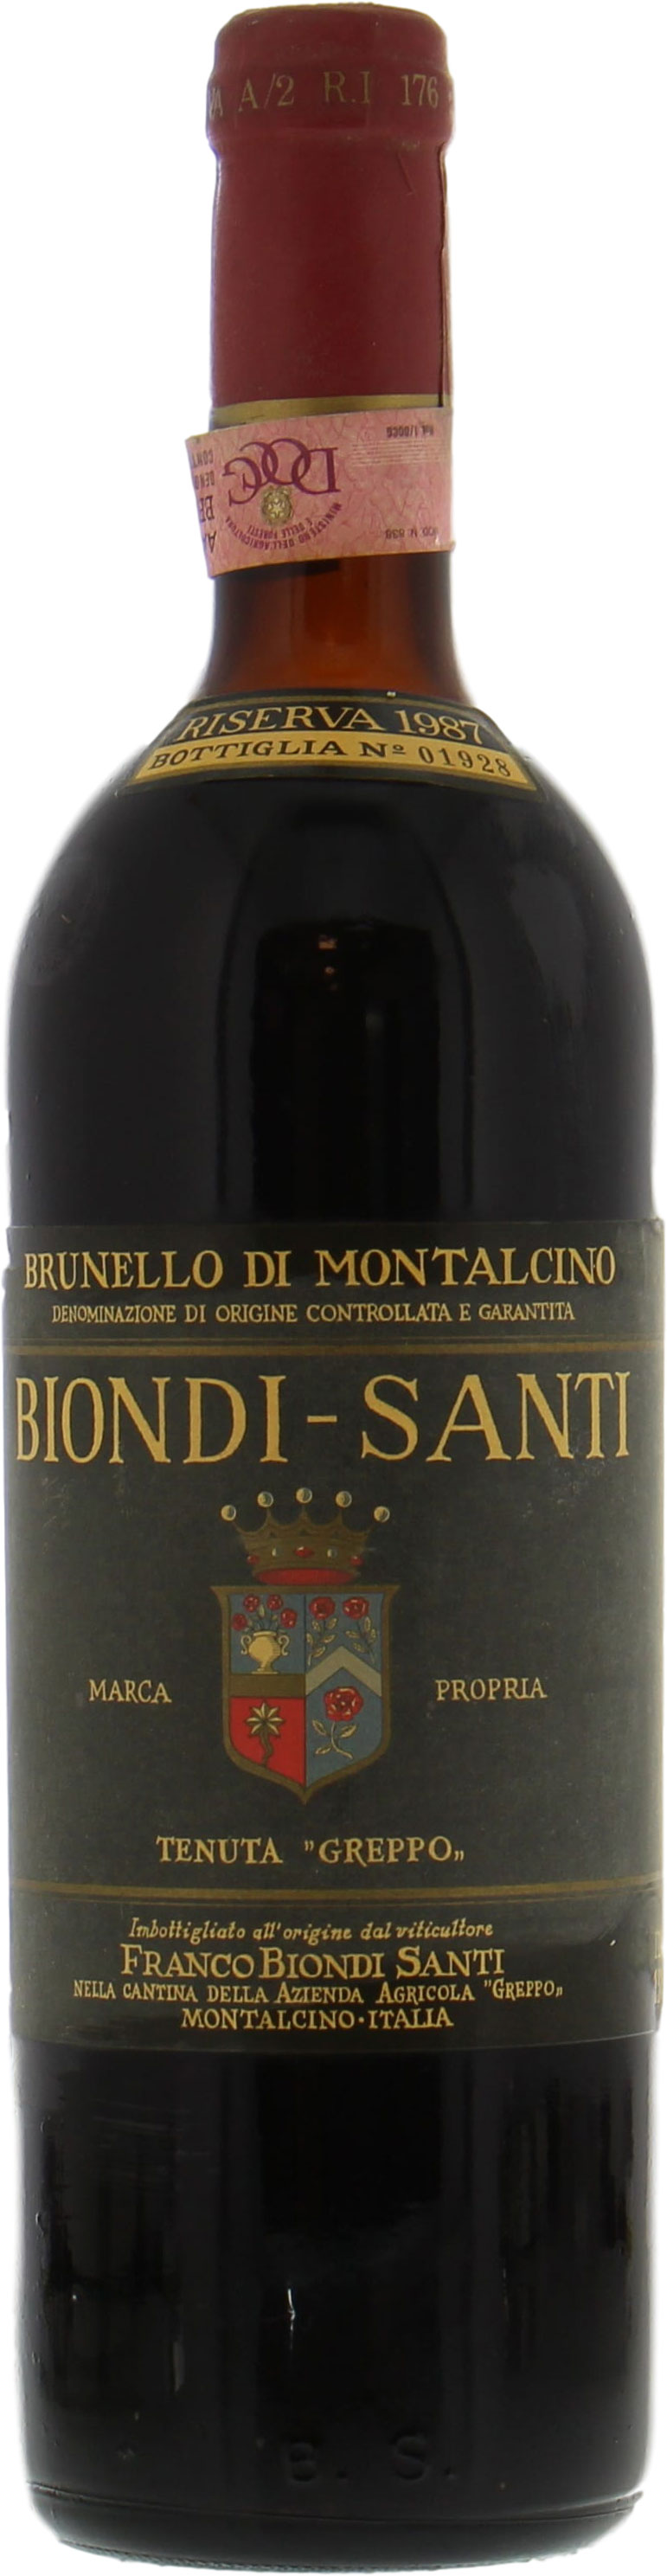 Biondi Santi - Brunello Riserva Greppo 1987 Top Shoulder